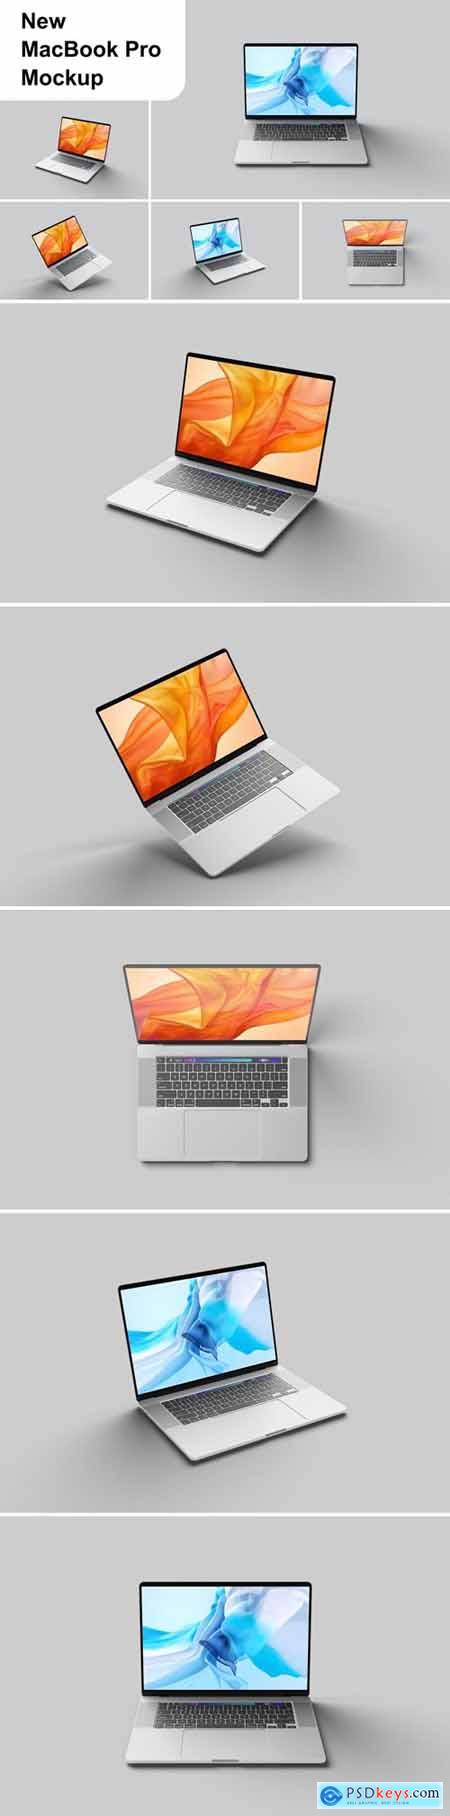 New MacBook Pro Mockup